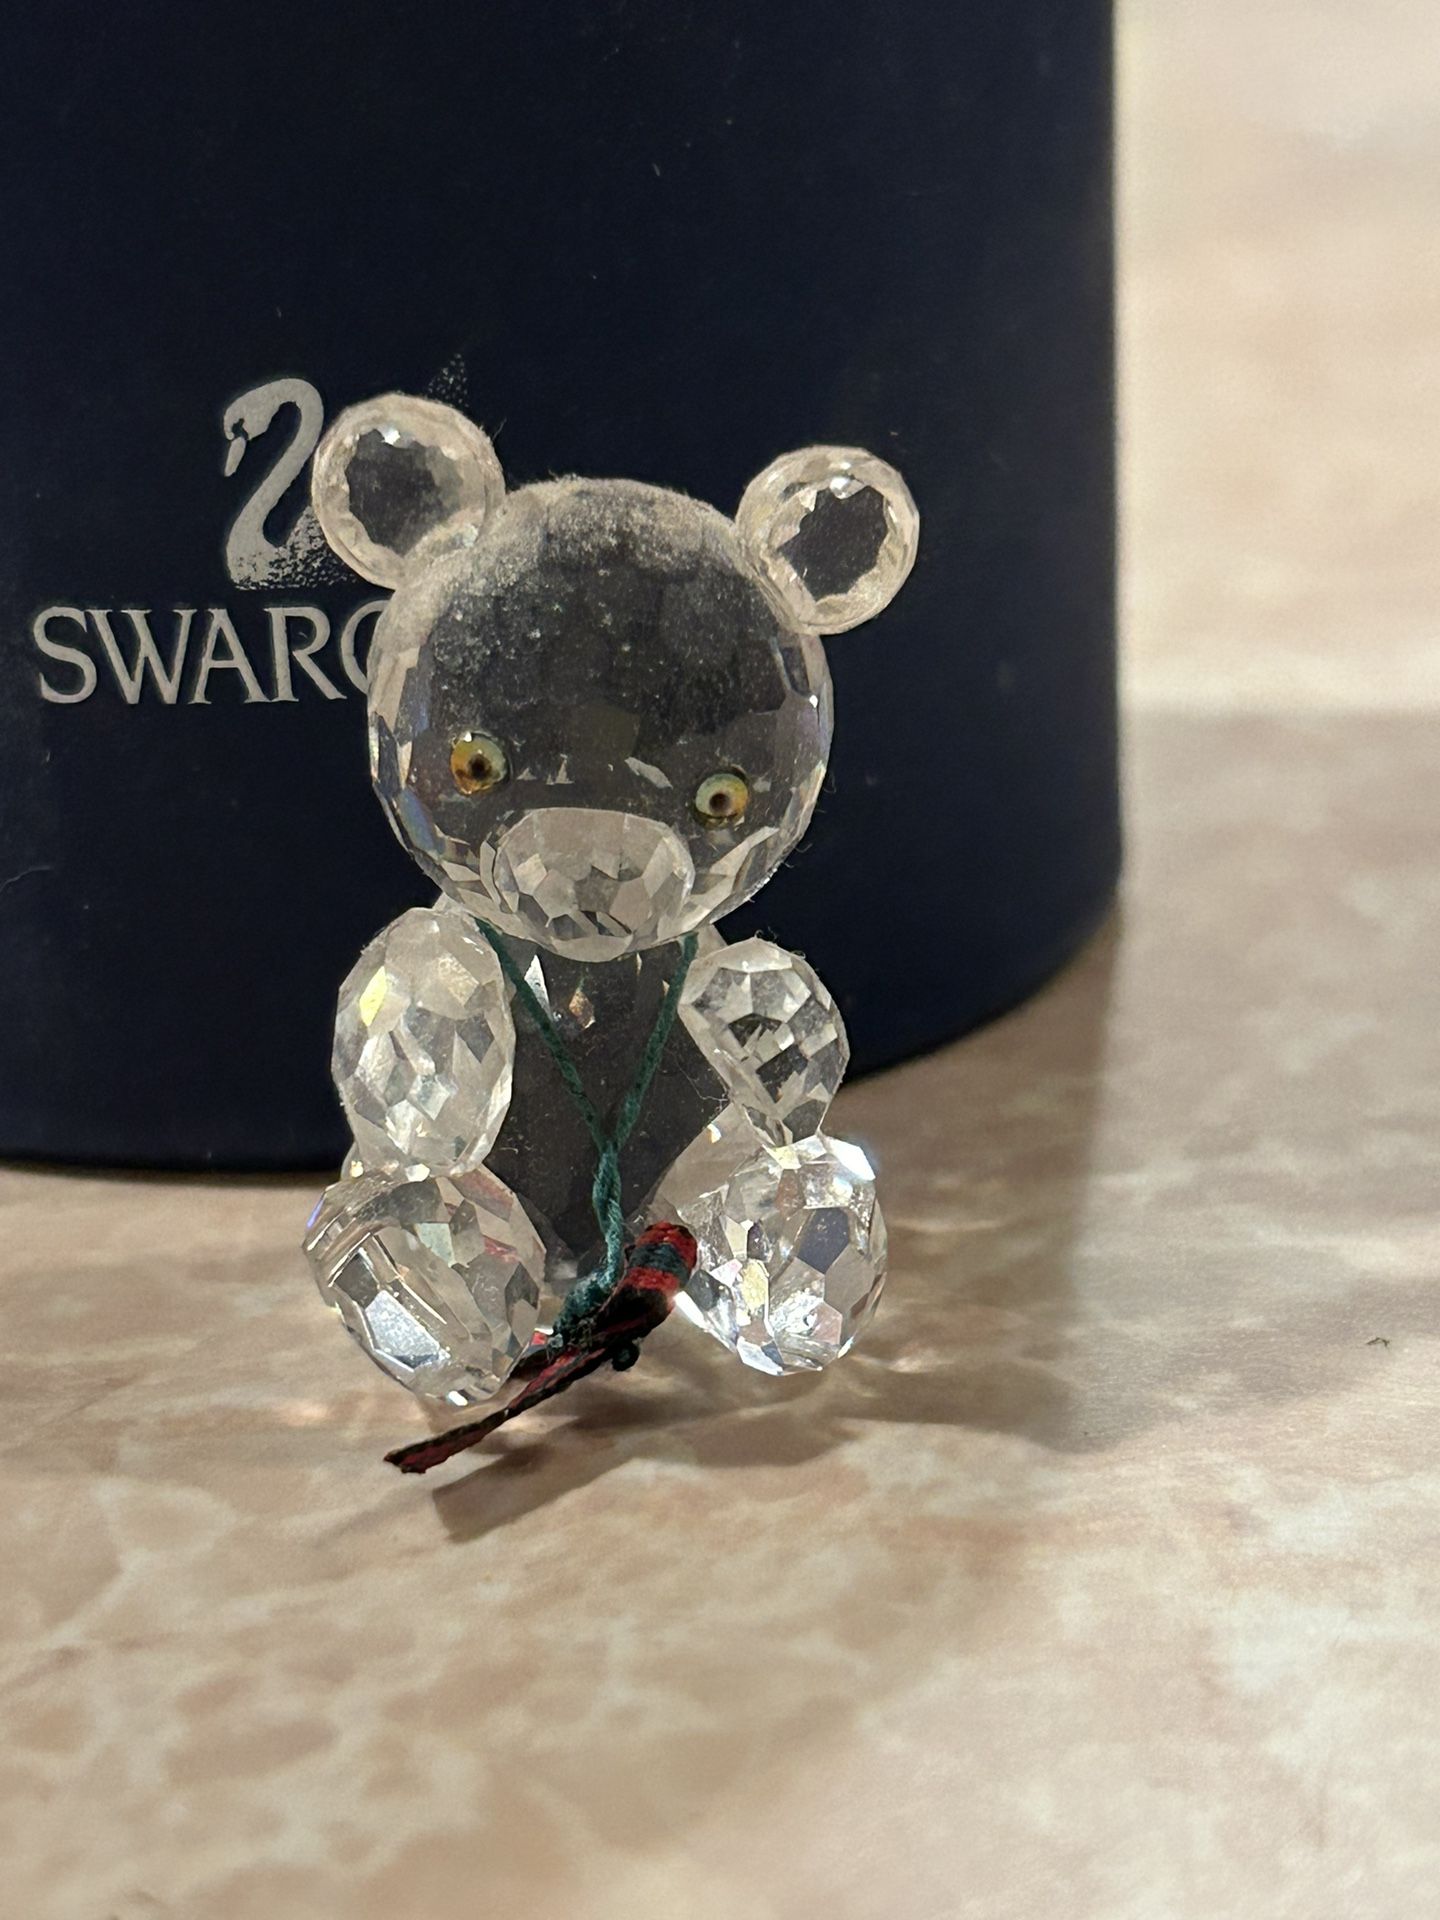 Swarovski Crystal Kris Bear